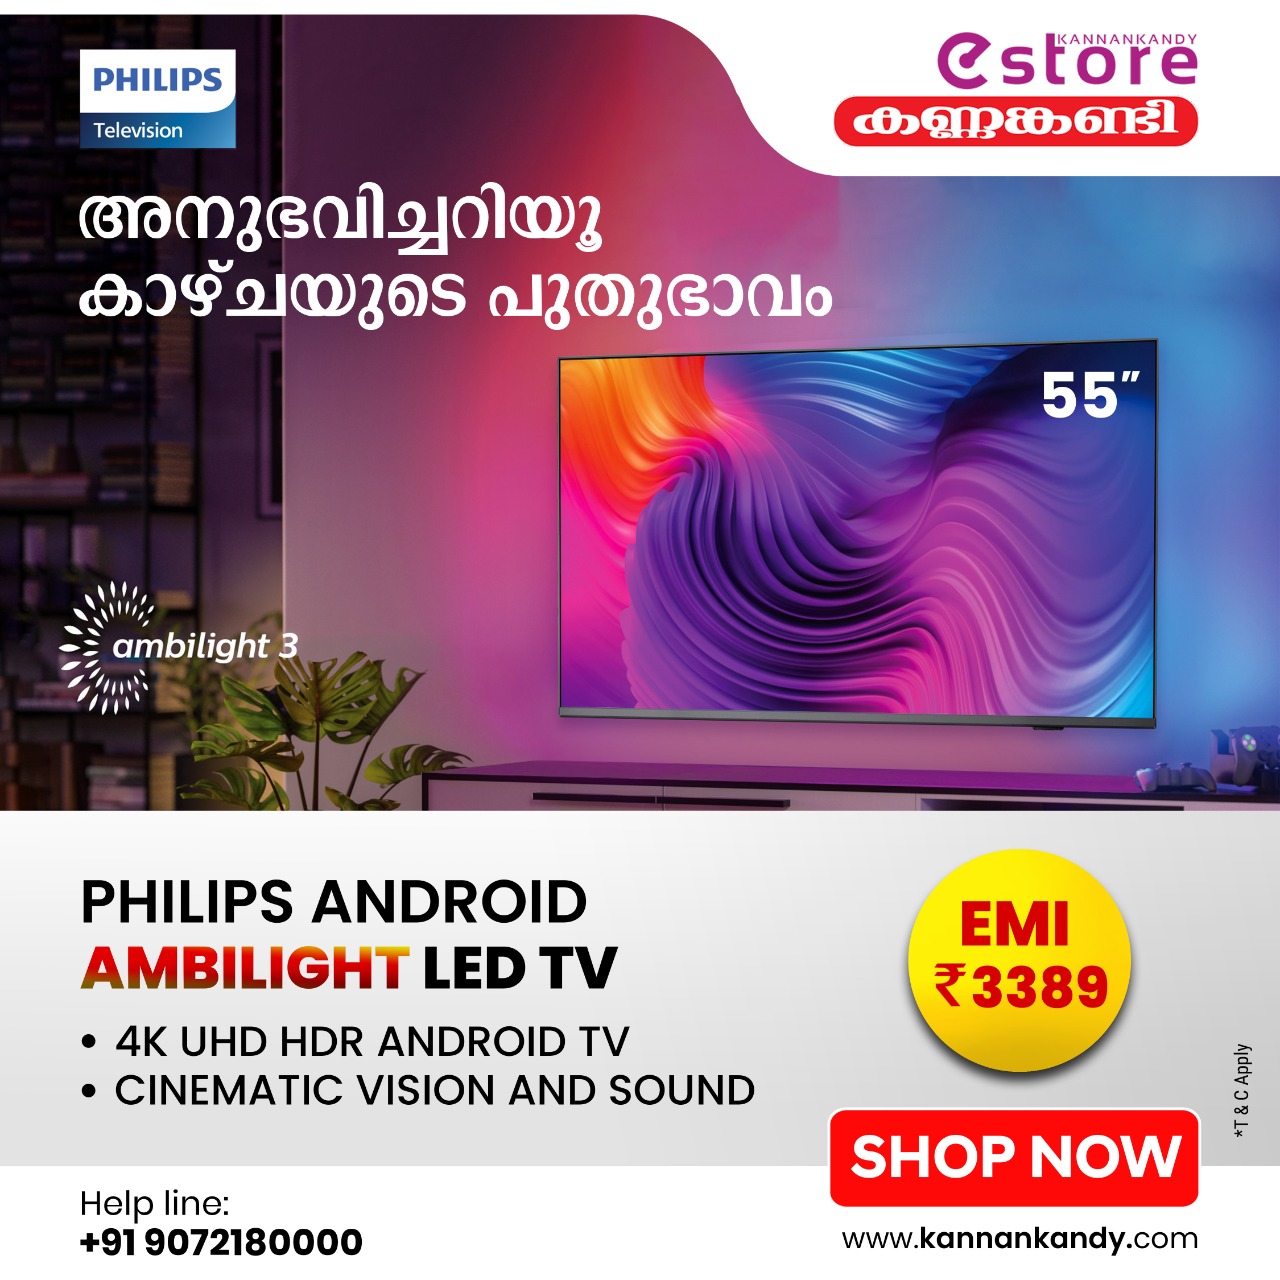 Kannankandy Philips-Android-ambilight-LED-TV